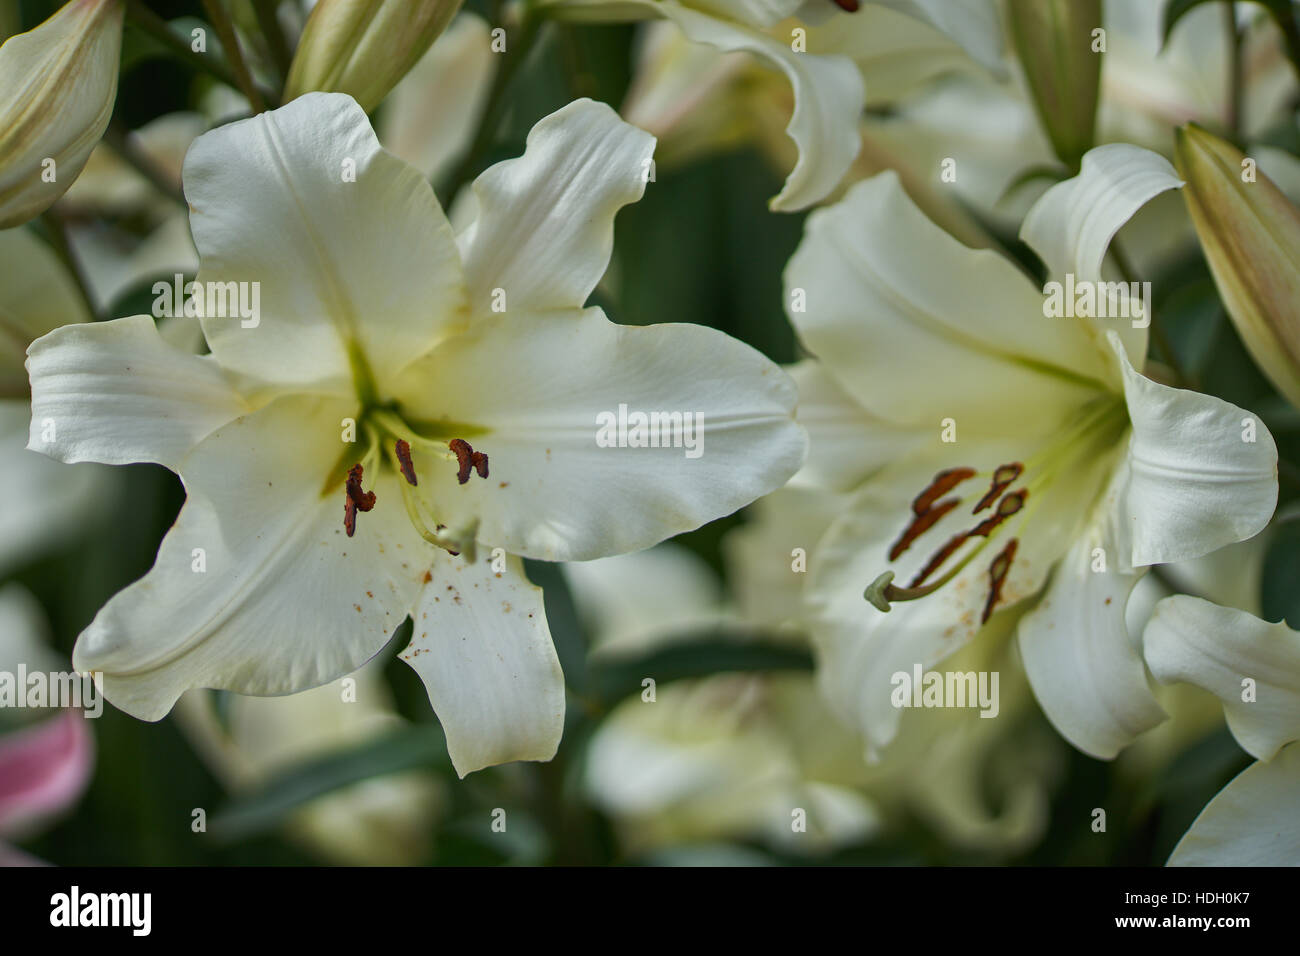 White lush lily flowers close up Lilium Pretty Woman Stock Photo